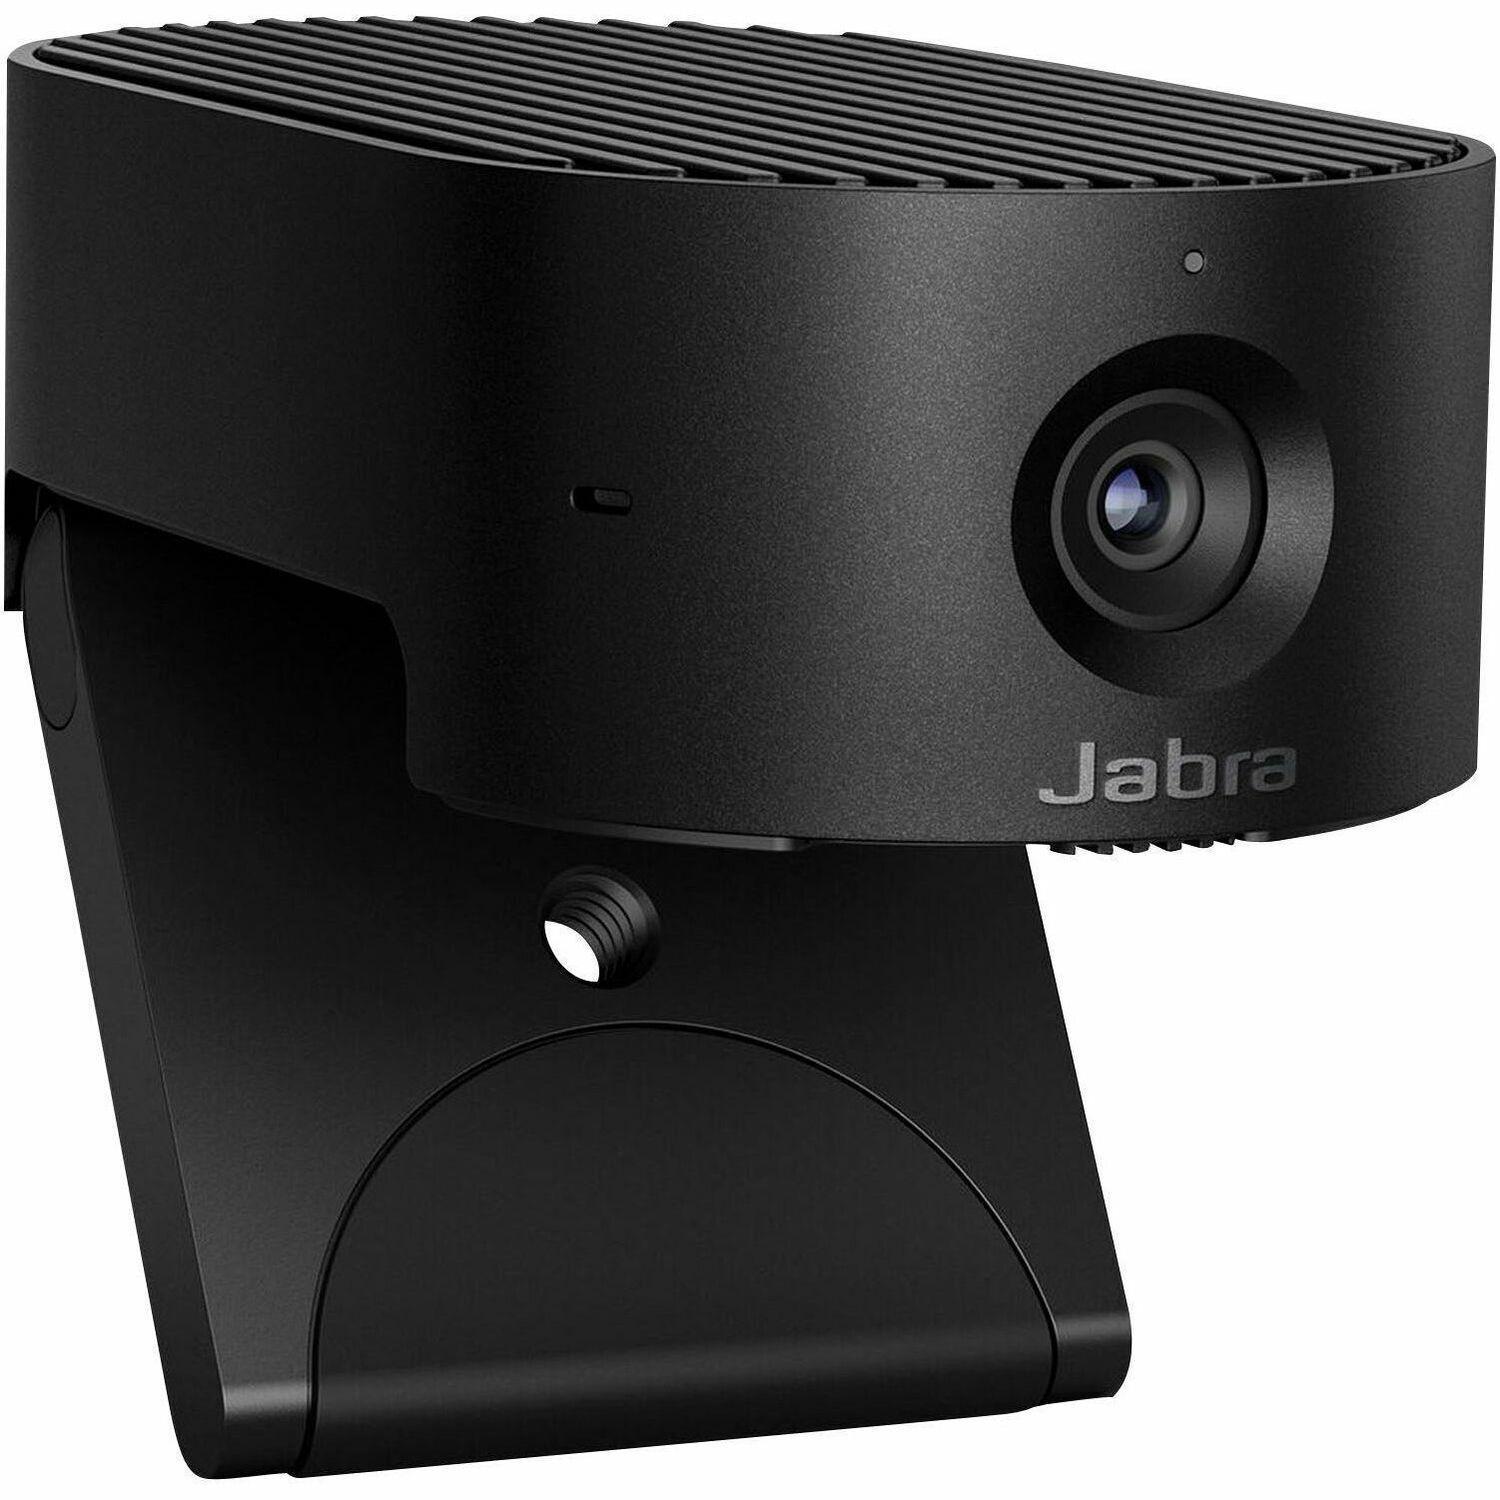 Jabra PanaCast Video Conferencing Camera - 13 Megapixel - 30 fps - USB 3.0 Type C - 1 Pack(s) - 3840 x 2160 Video - 117° Angle - 3x Digital Zoom